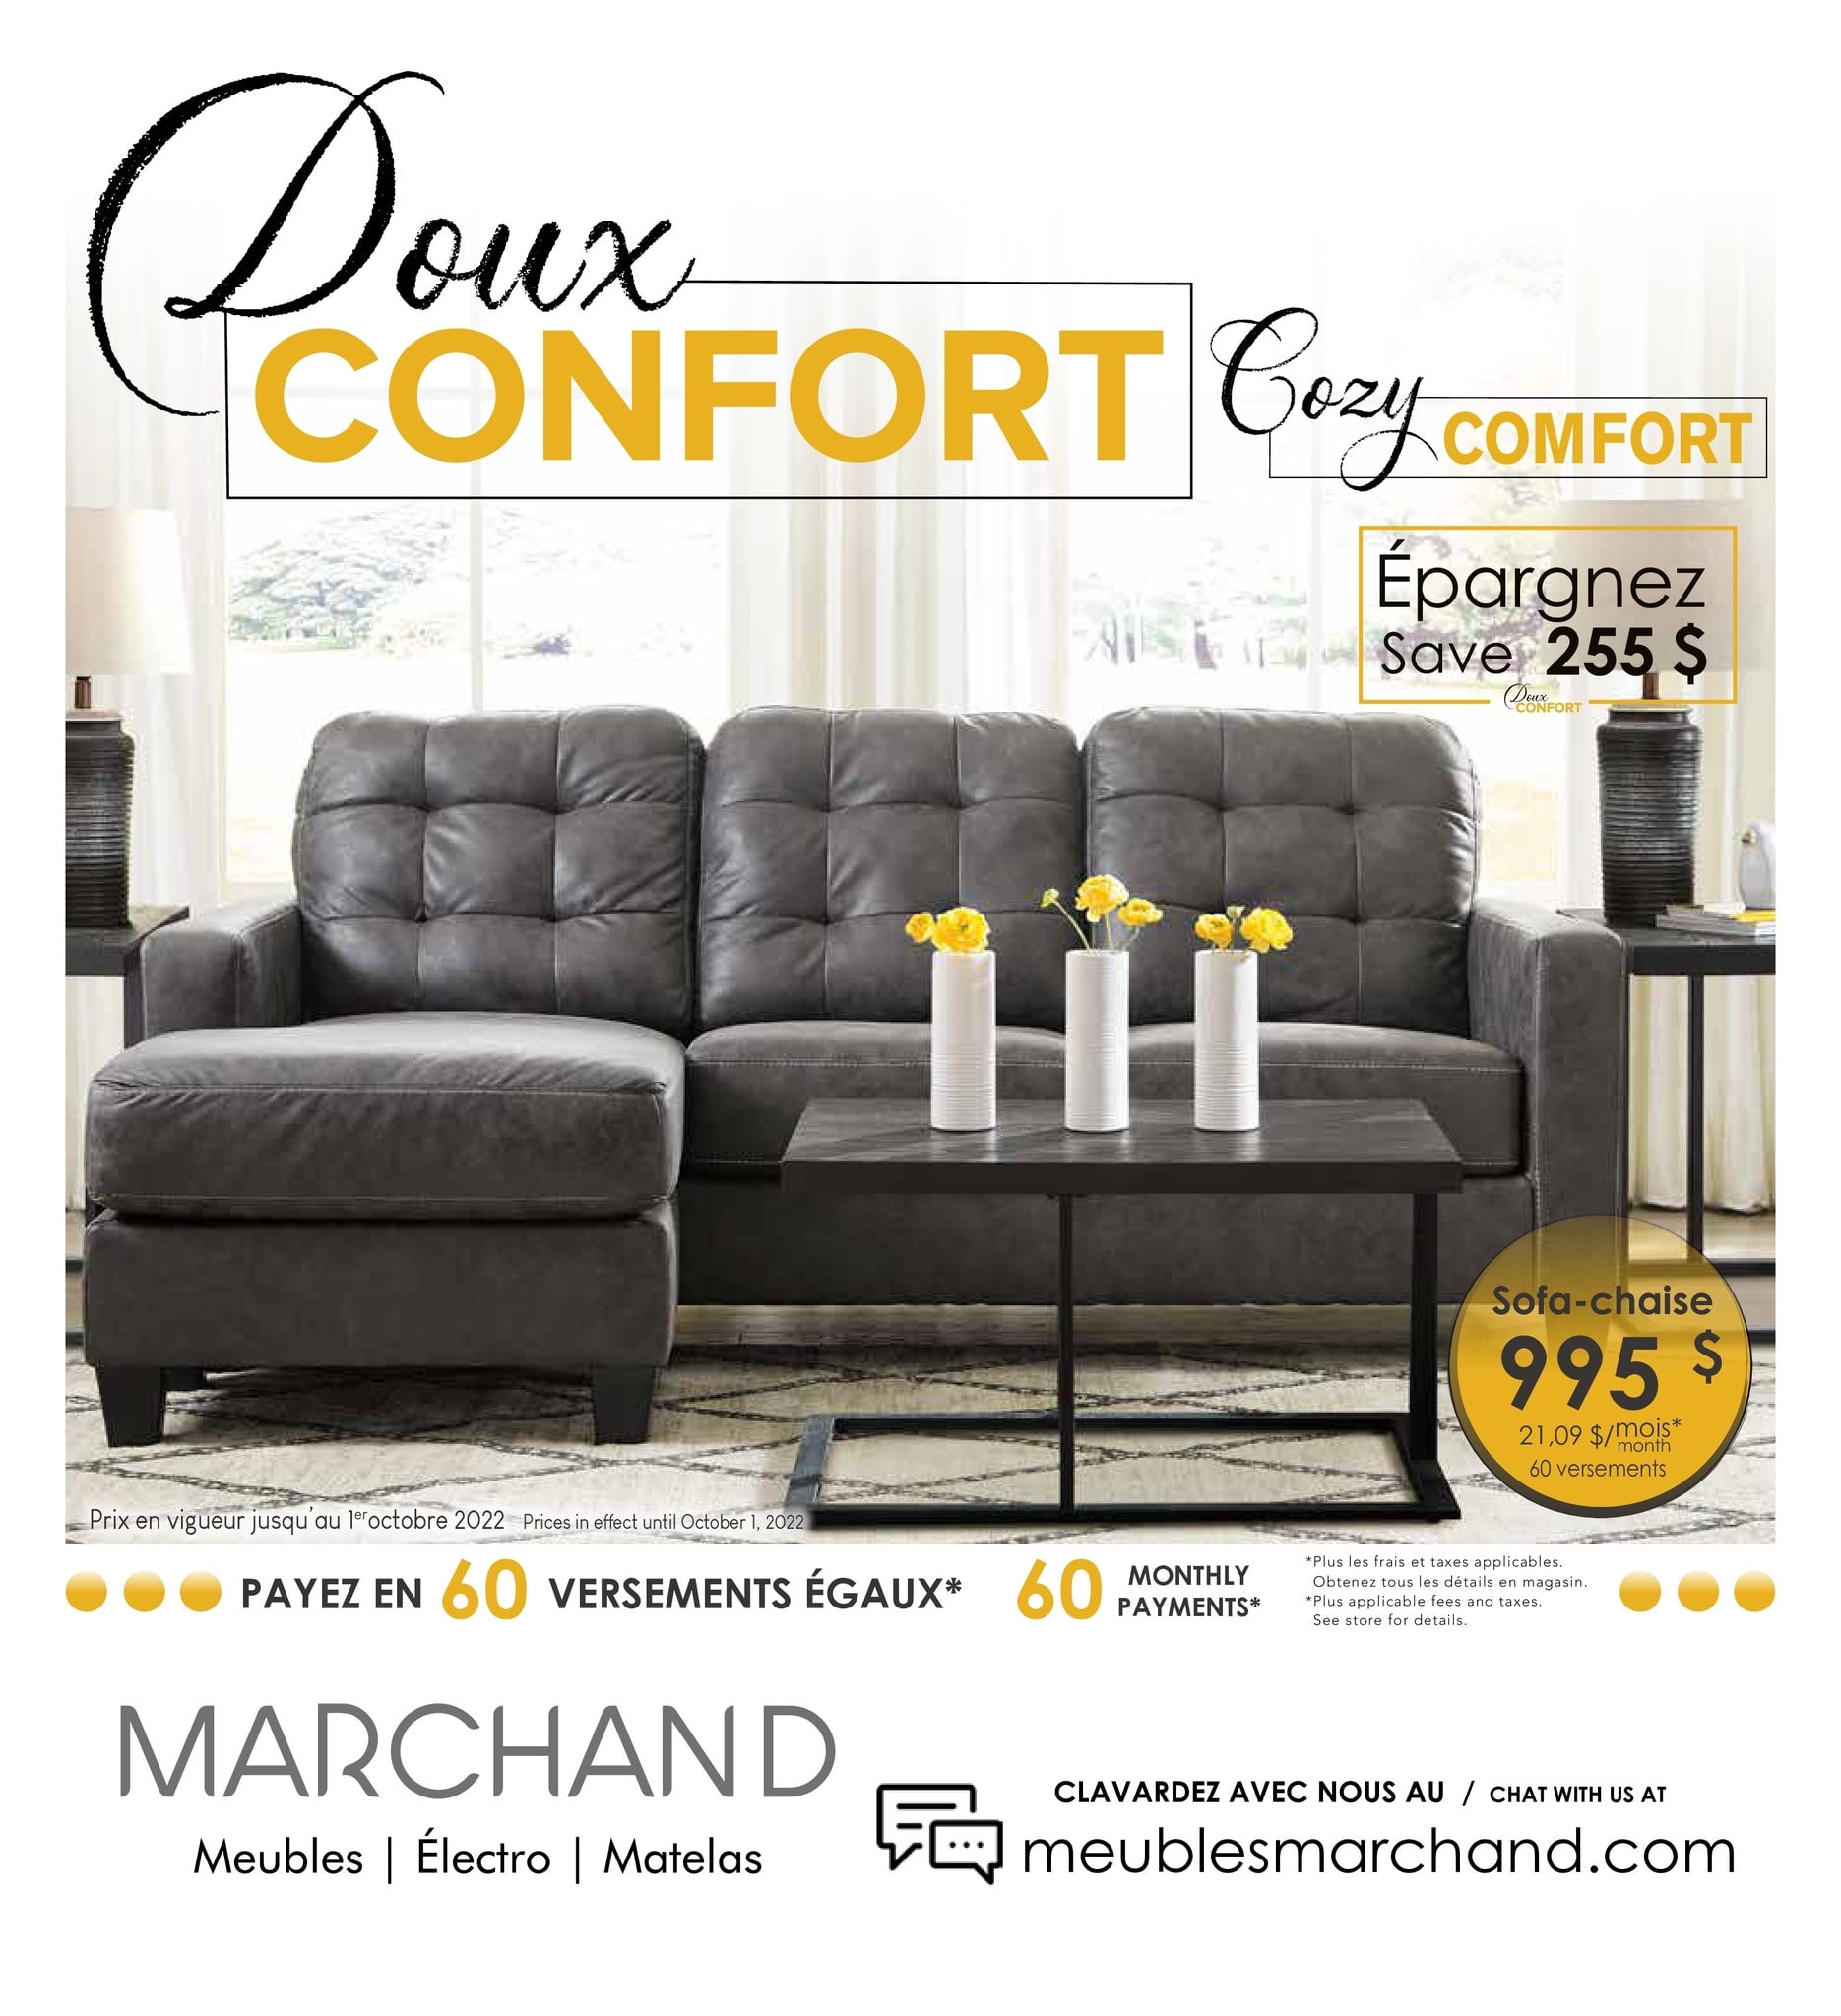 Circulaire Meubles Marchand - Doux Confort - Page 1